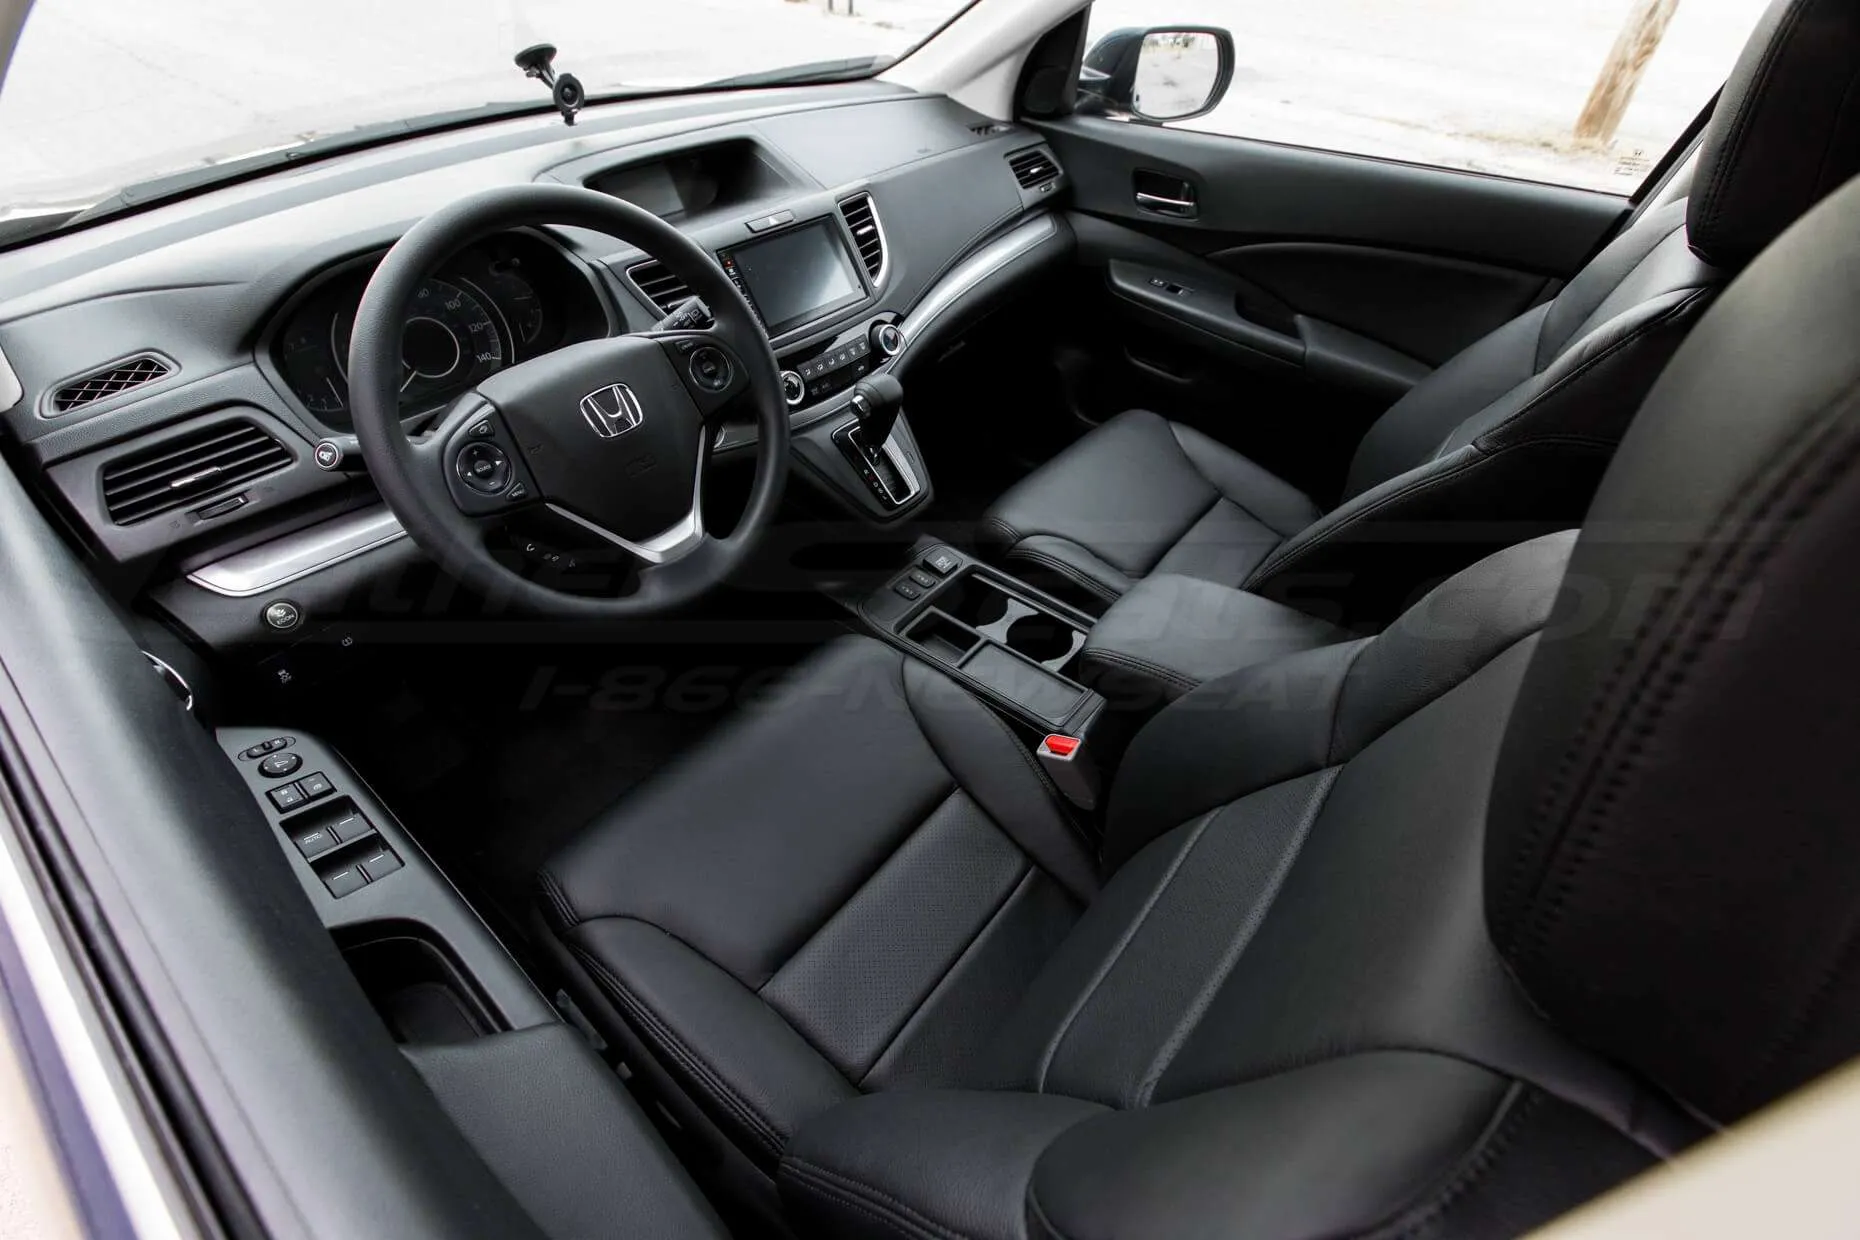 Honda CRV Leather Seat Kit - Black - Installed - Front drivers seat